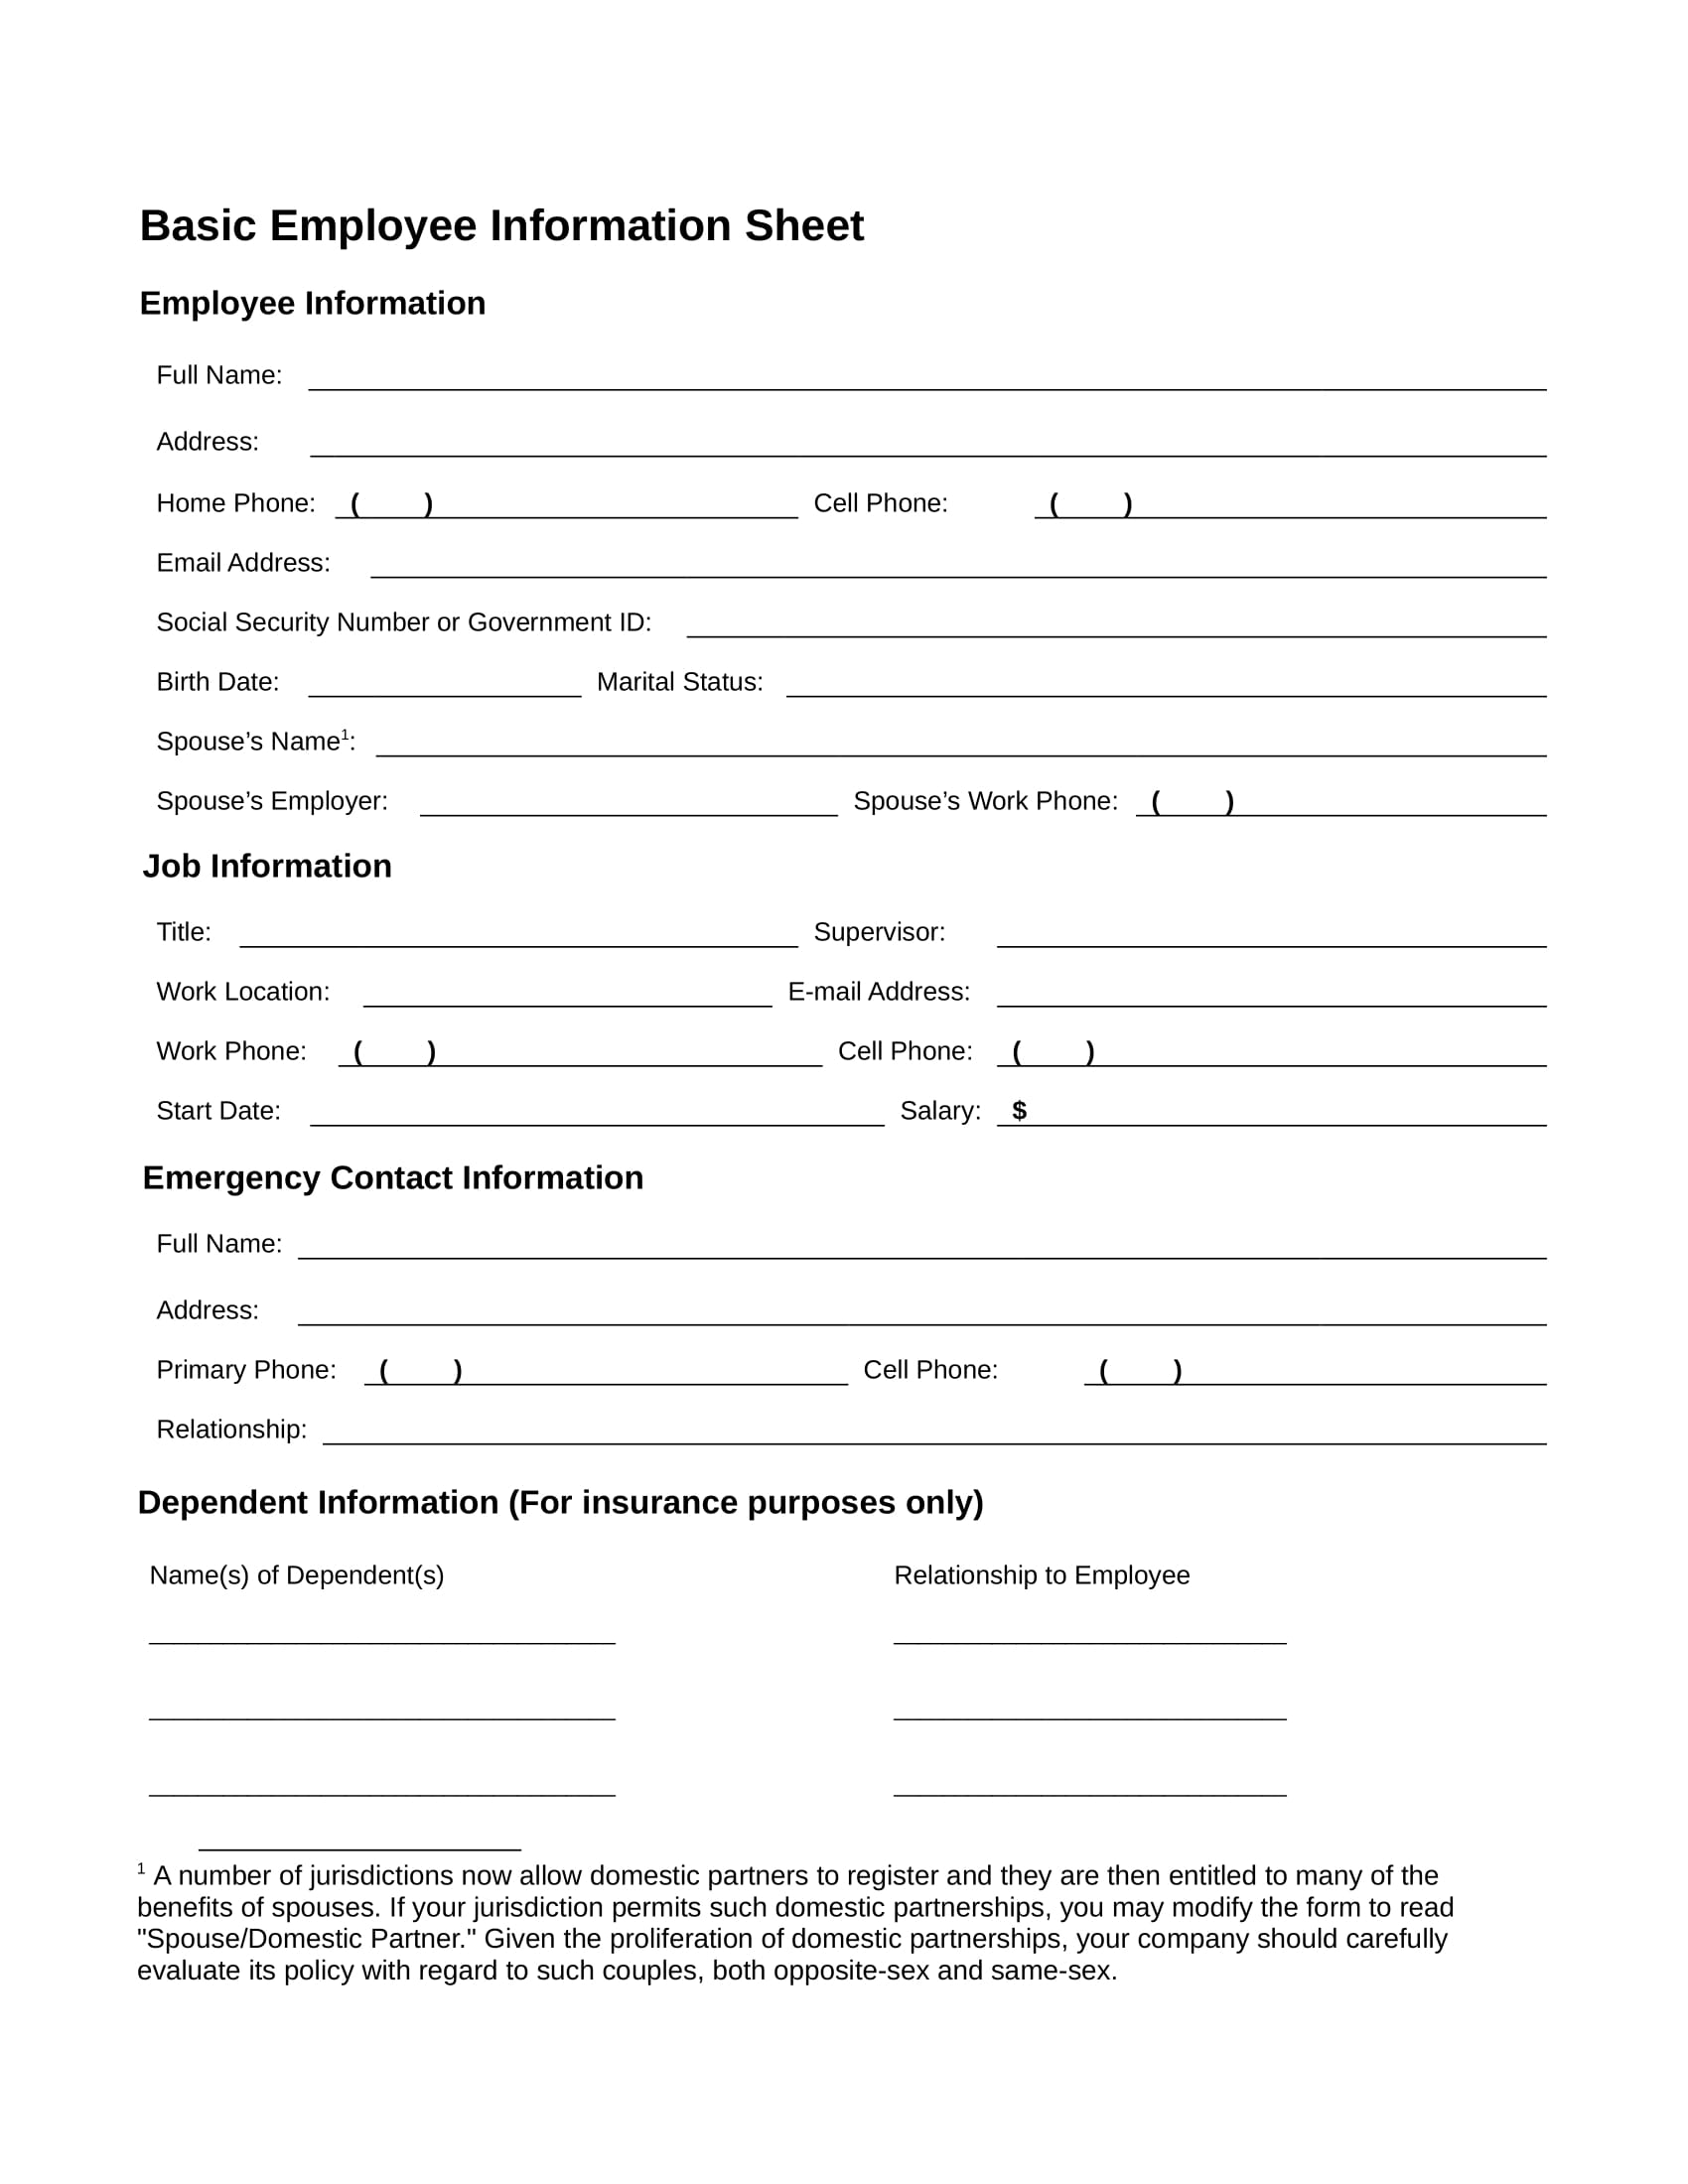 restaurant employee information form in doc 1